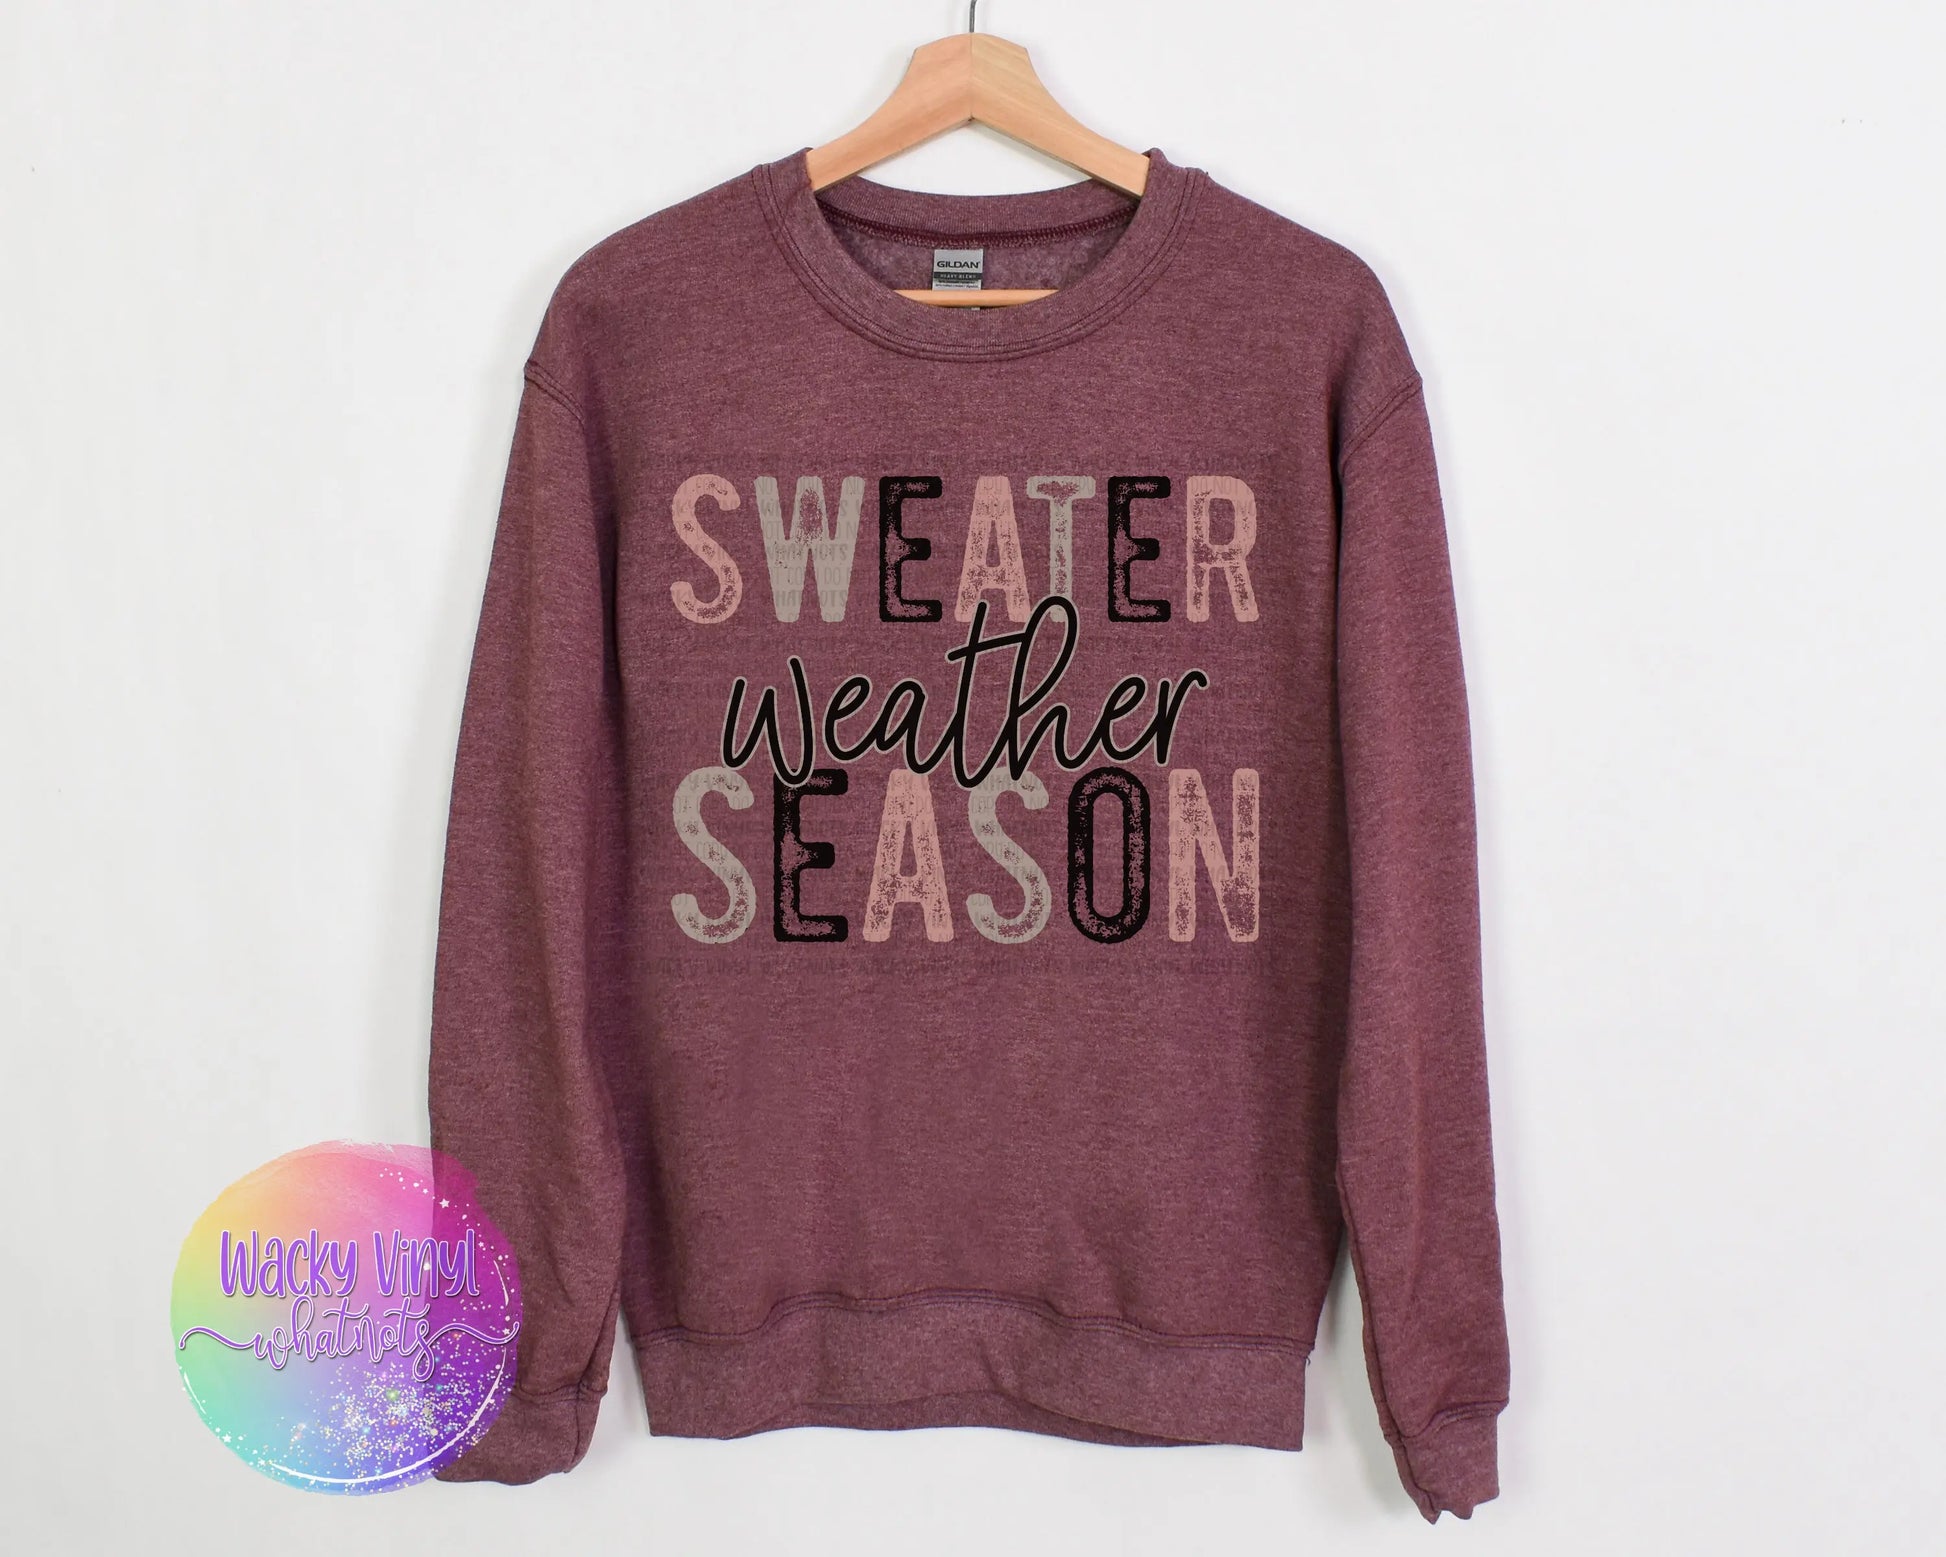 Sweater Weather Season Sweatshirt Wacky Vinyl Whatnots, LLC